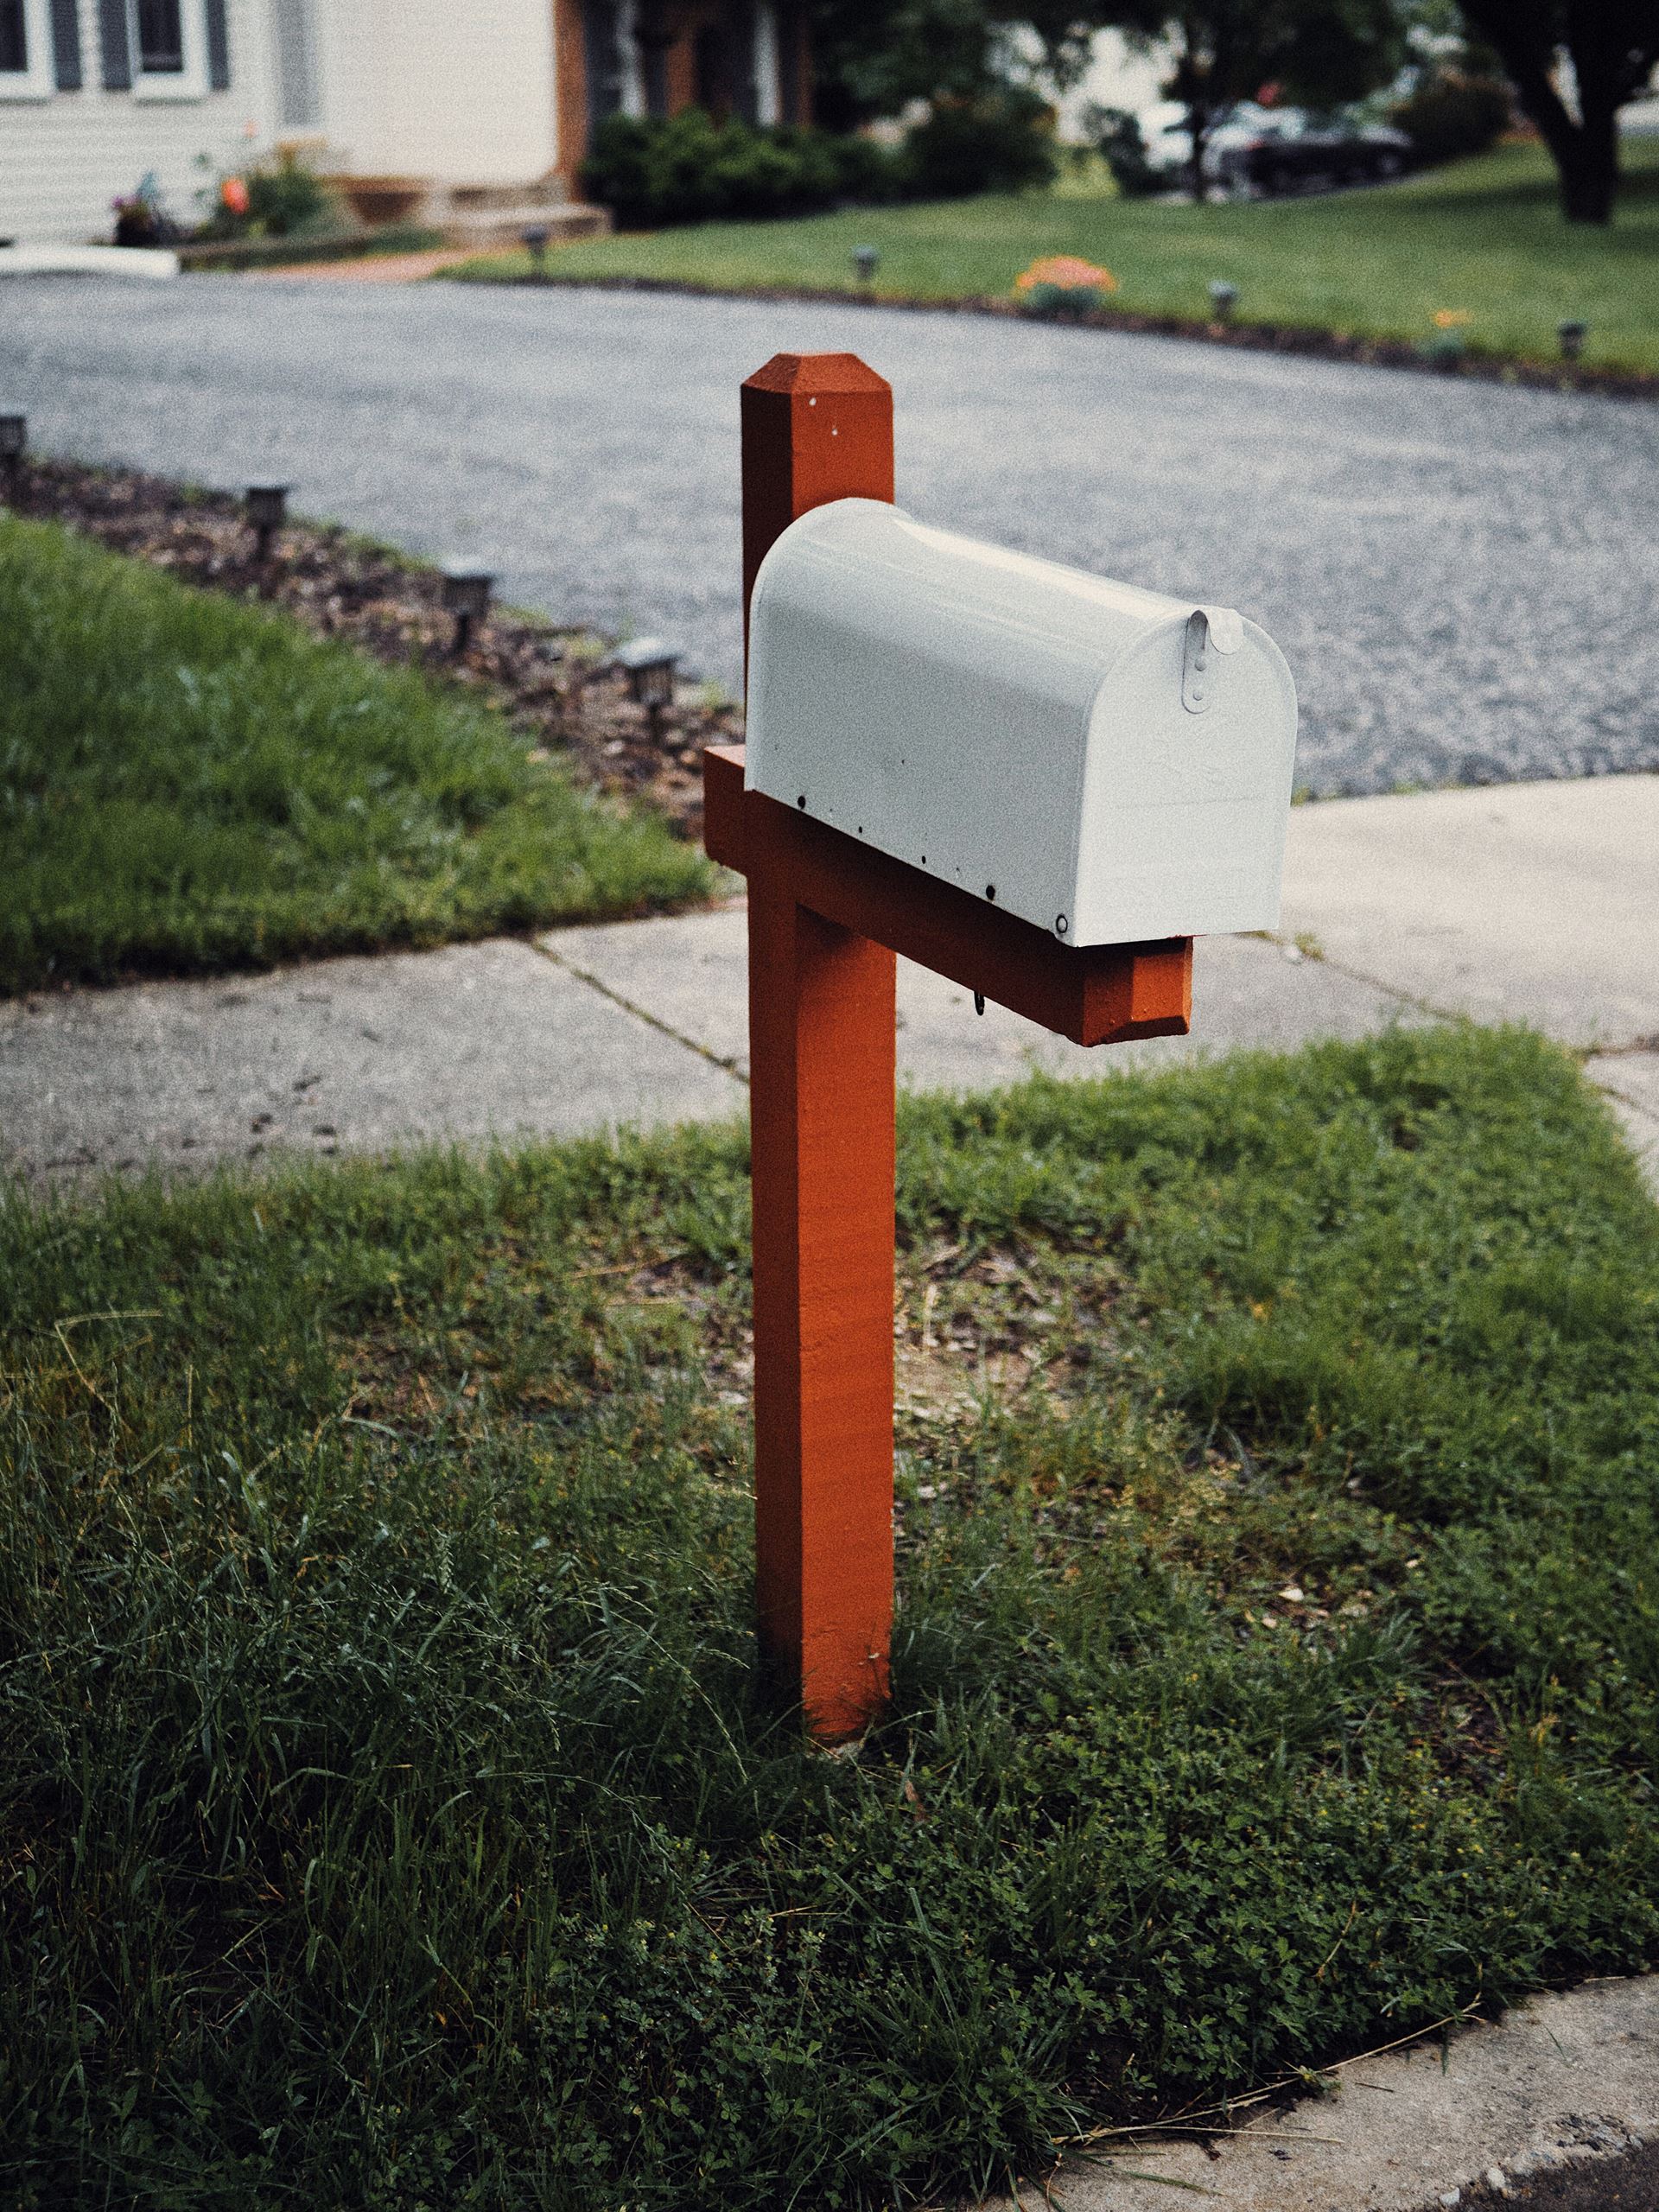 a mailbox